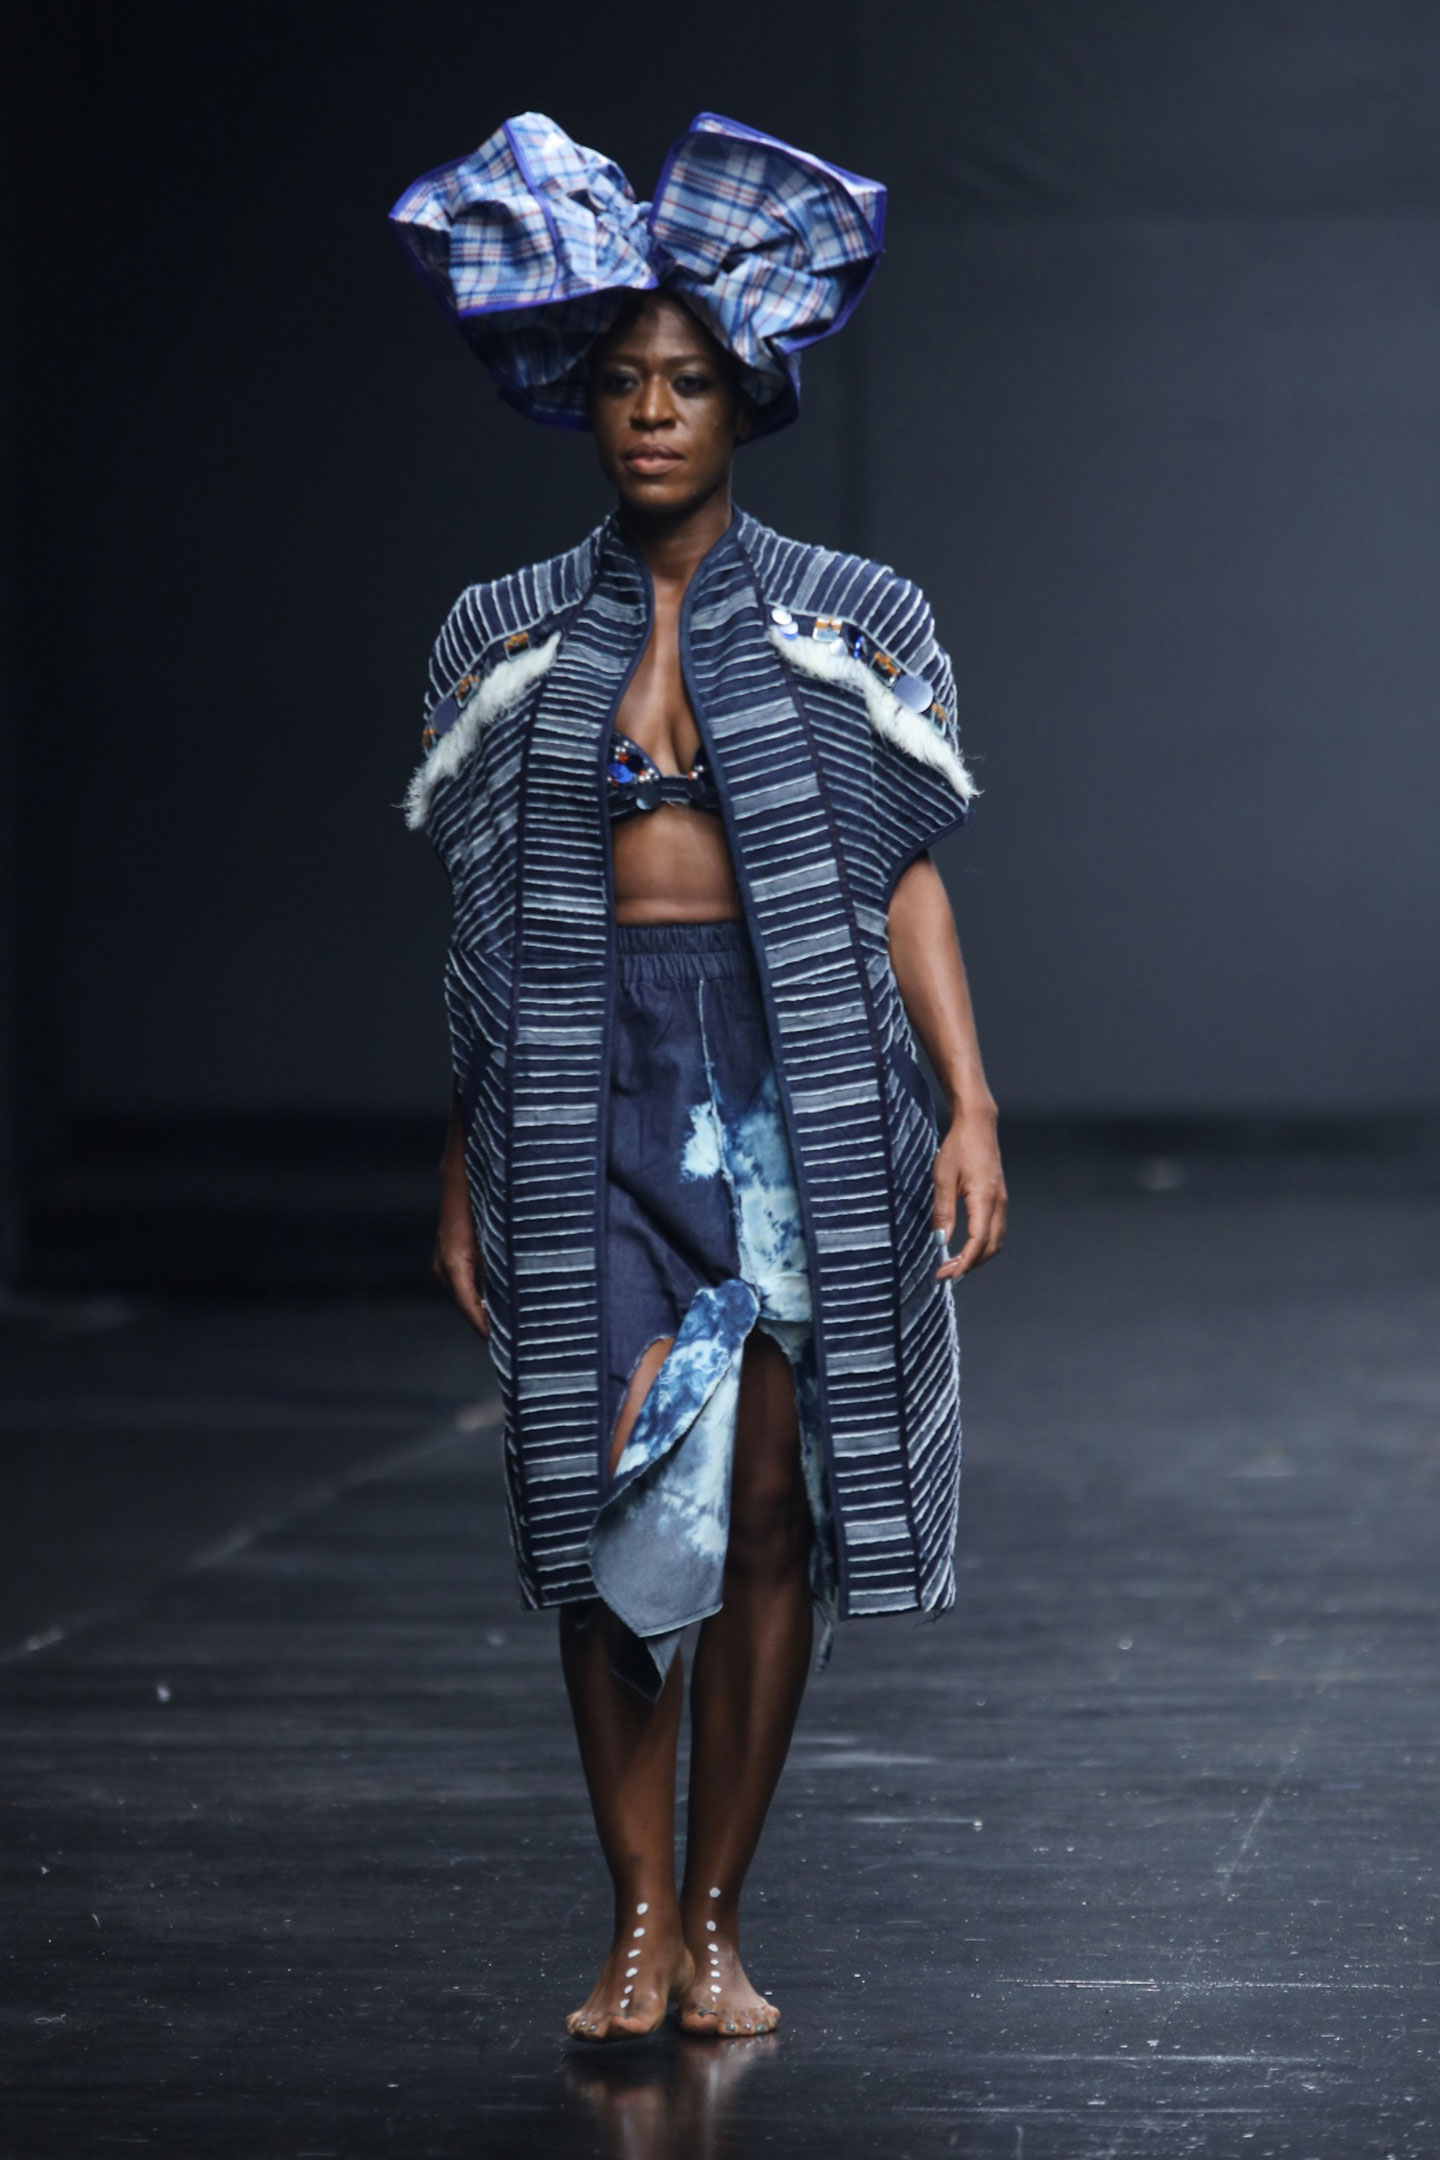 DAKALA CLOTH ensemble, 'Who Knew' collection, Abuja, Nigeria, SpringSummer 2019 Image courtesy Nkwo Onwuka (c) Kola Oshalusi © Victoria and Albert Museum, London